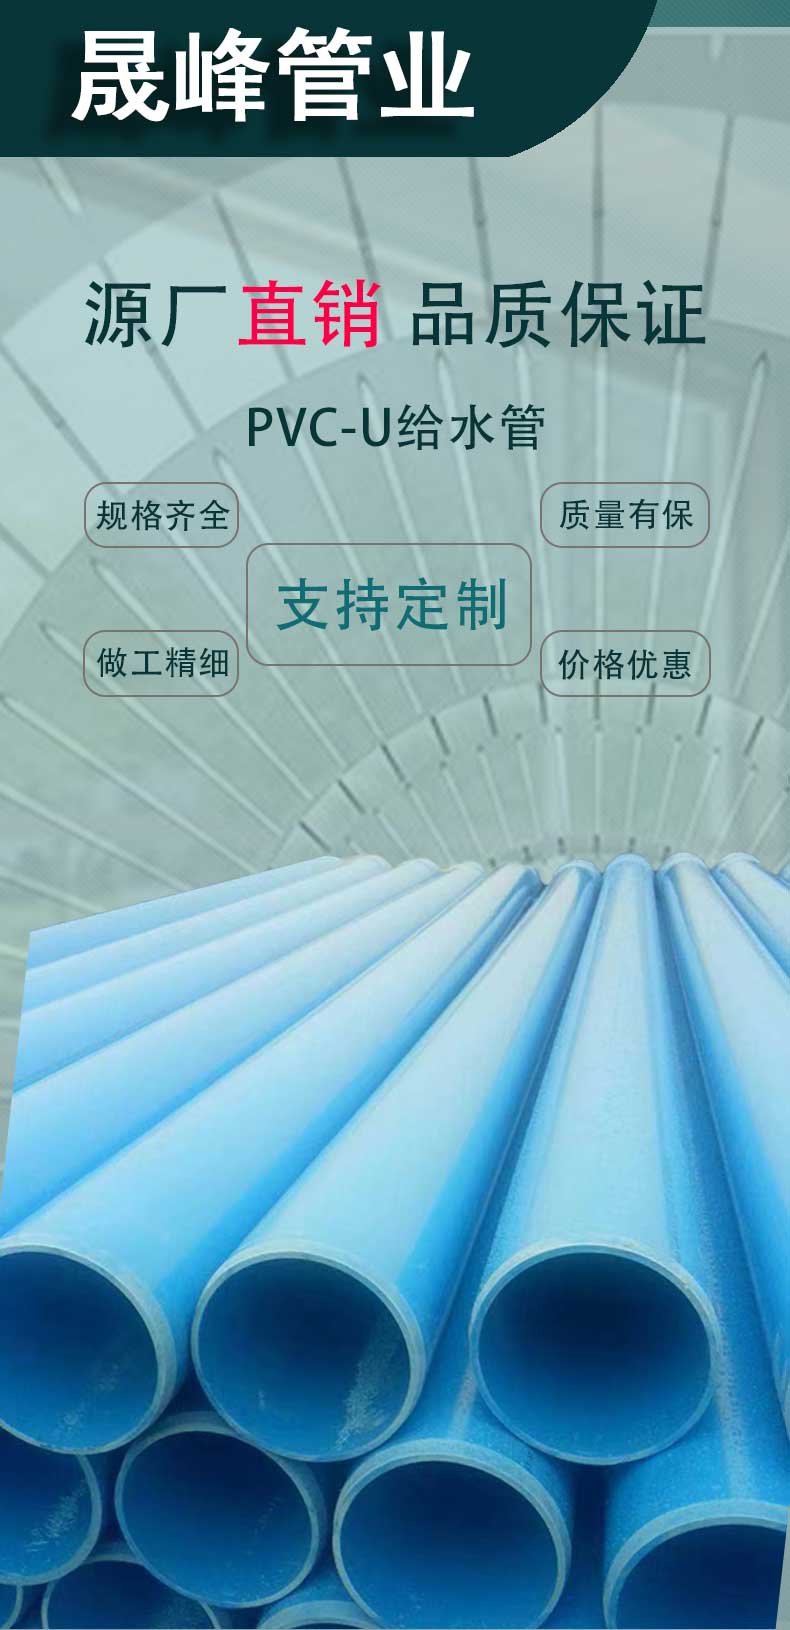 PVC-U water supply pipe 90mm PVC pipe drainage hard pipe farmland irrigation sprinkler UPVC pipe